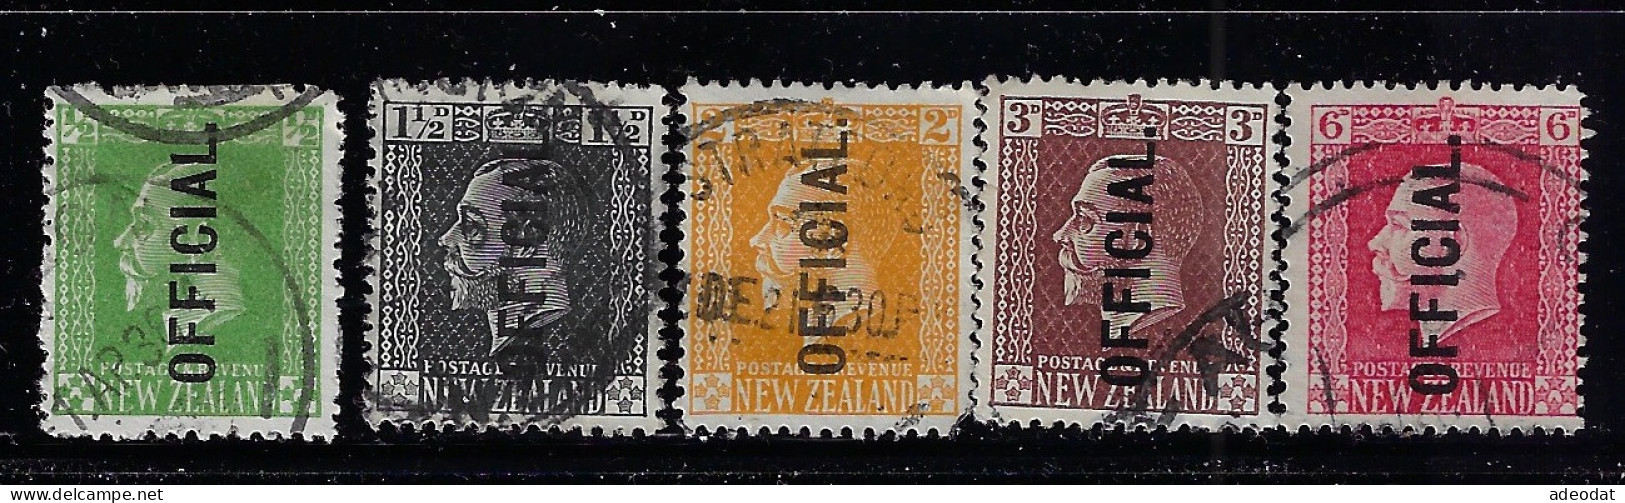 NEW ZEALAND 1915 0FFICIAL STAMPS  SCOTT #O41,O43,O45,O46,O48 USED - Service